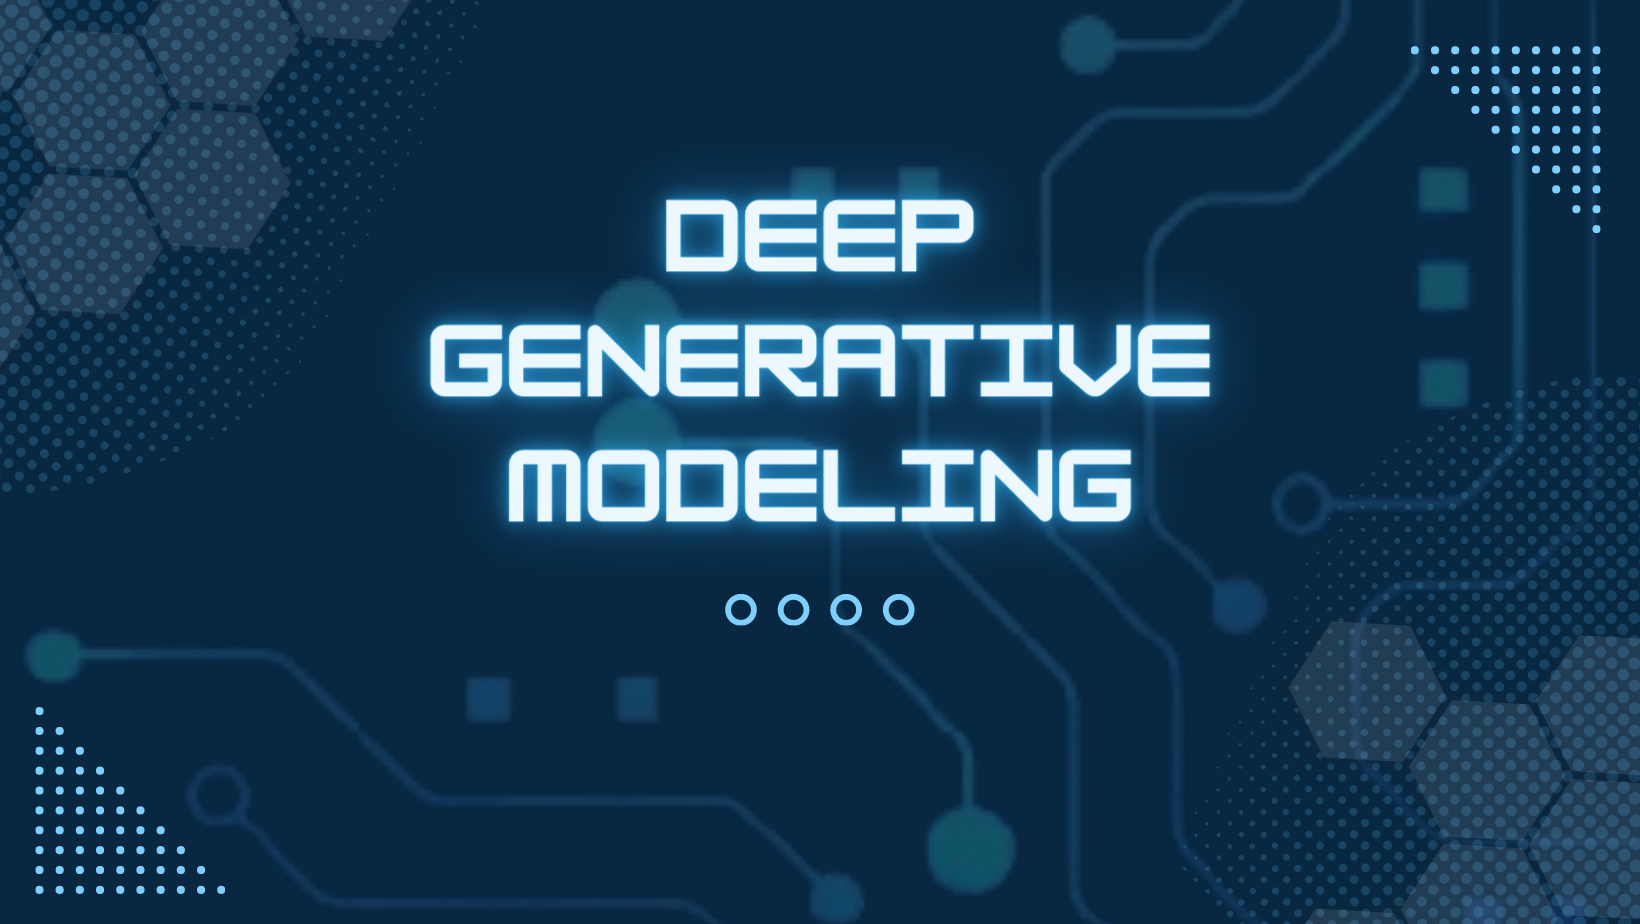 Deep Generative Modeling